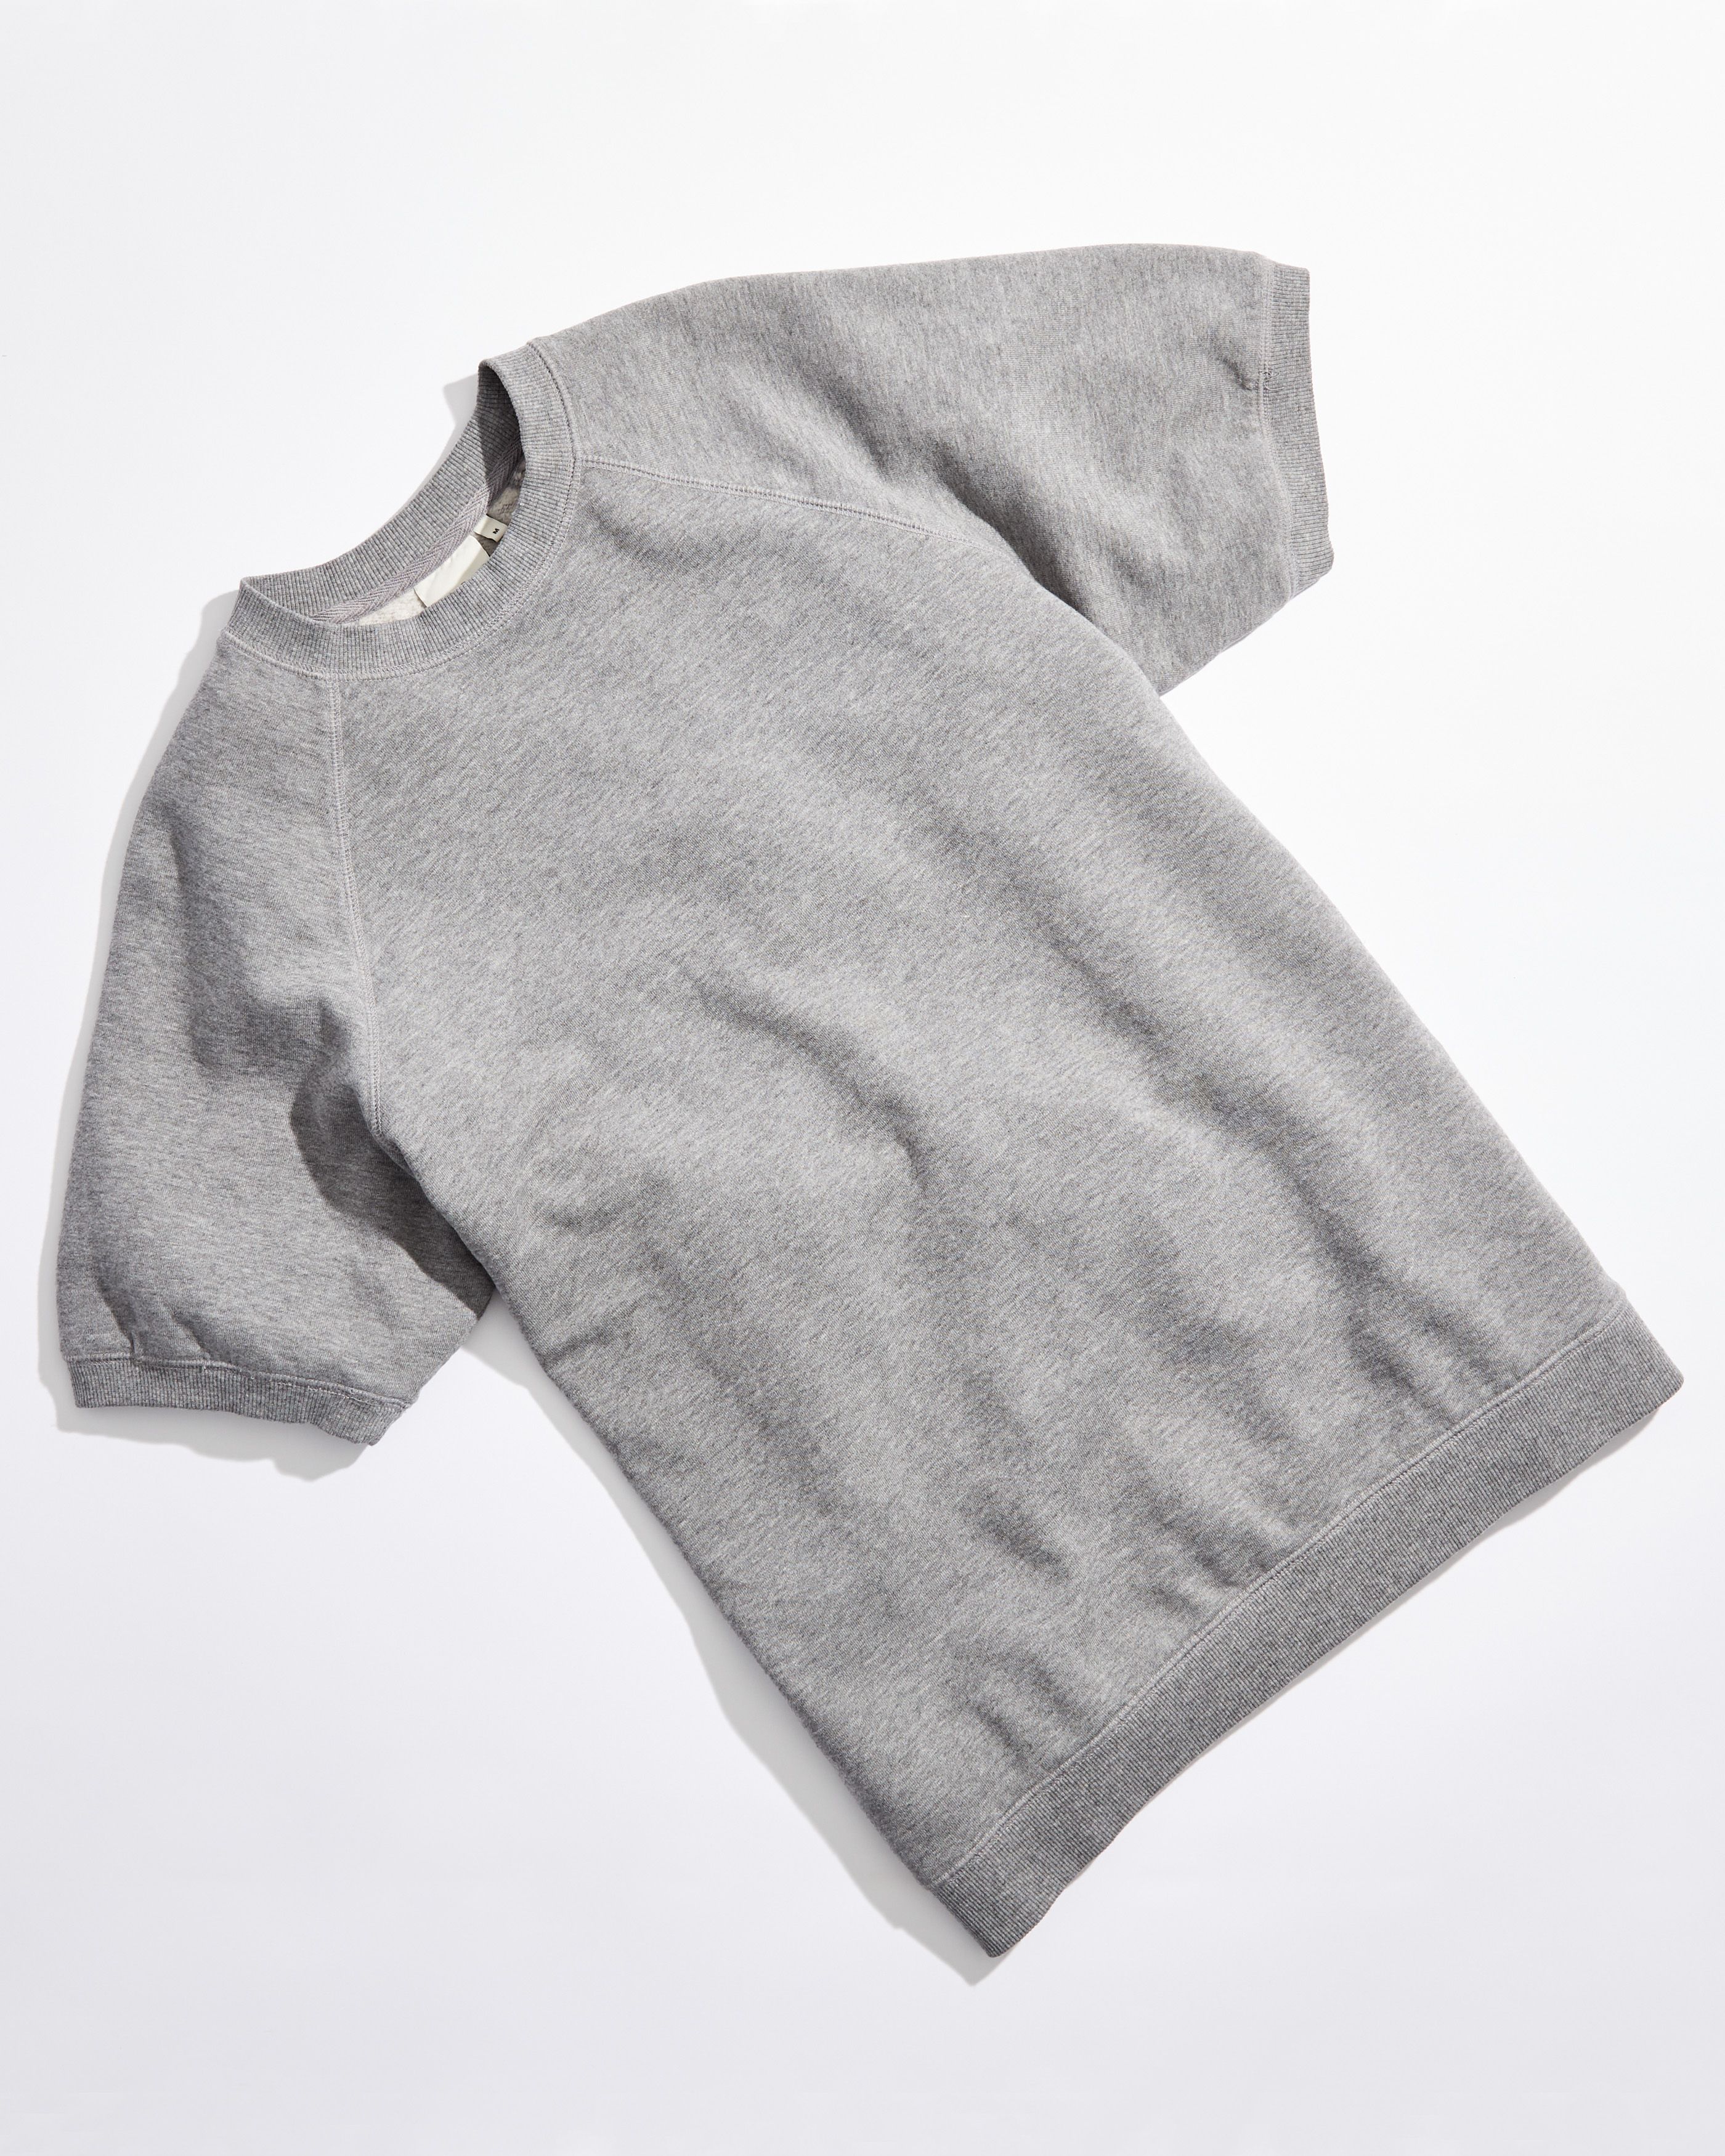 Richer Short Sleeve Sweatshirt Review - Short Sweatshirts for Men